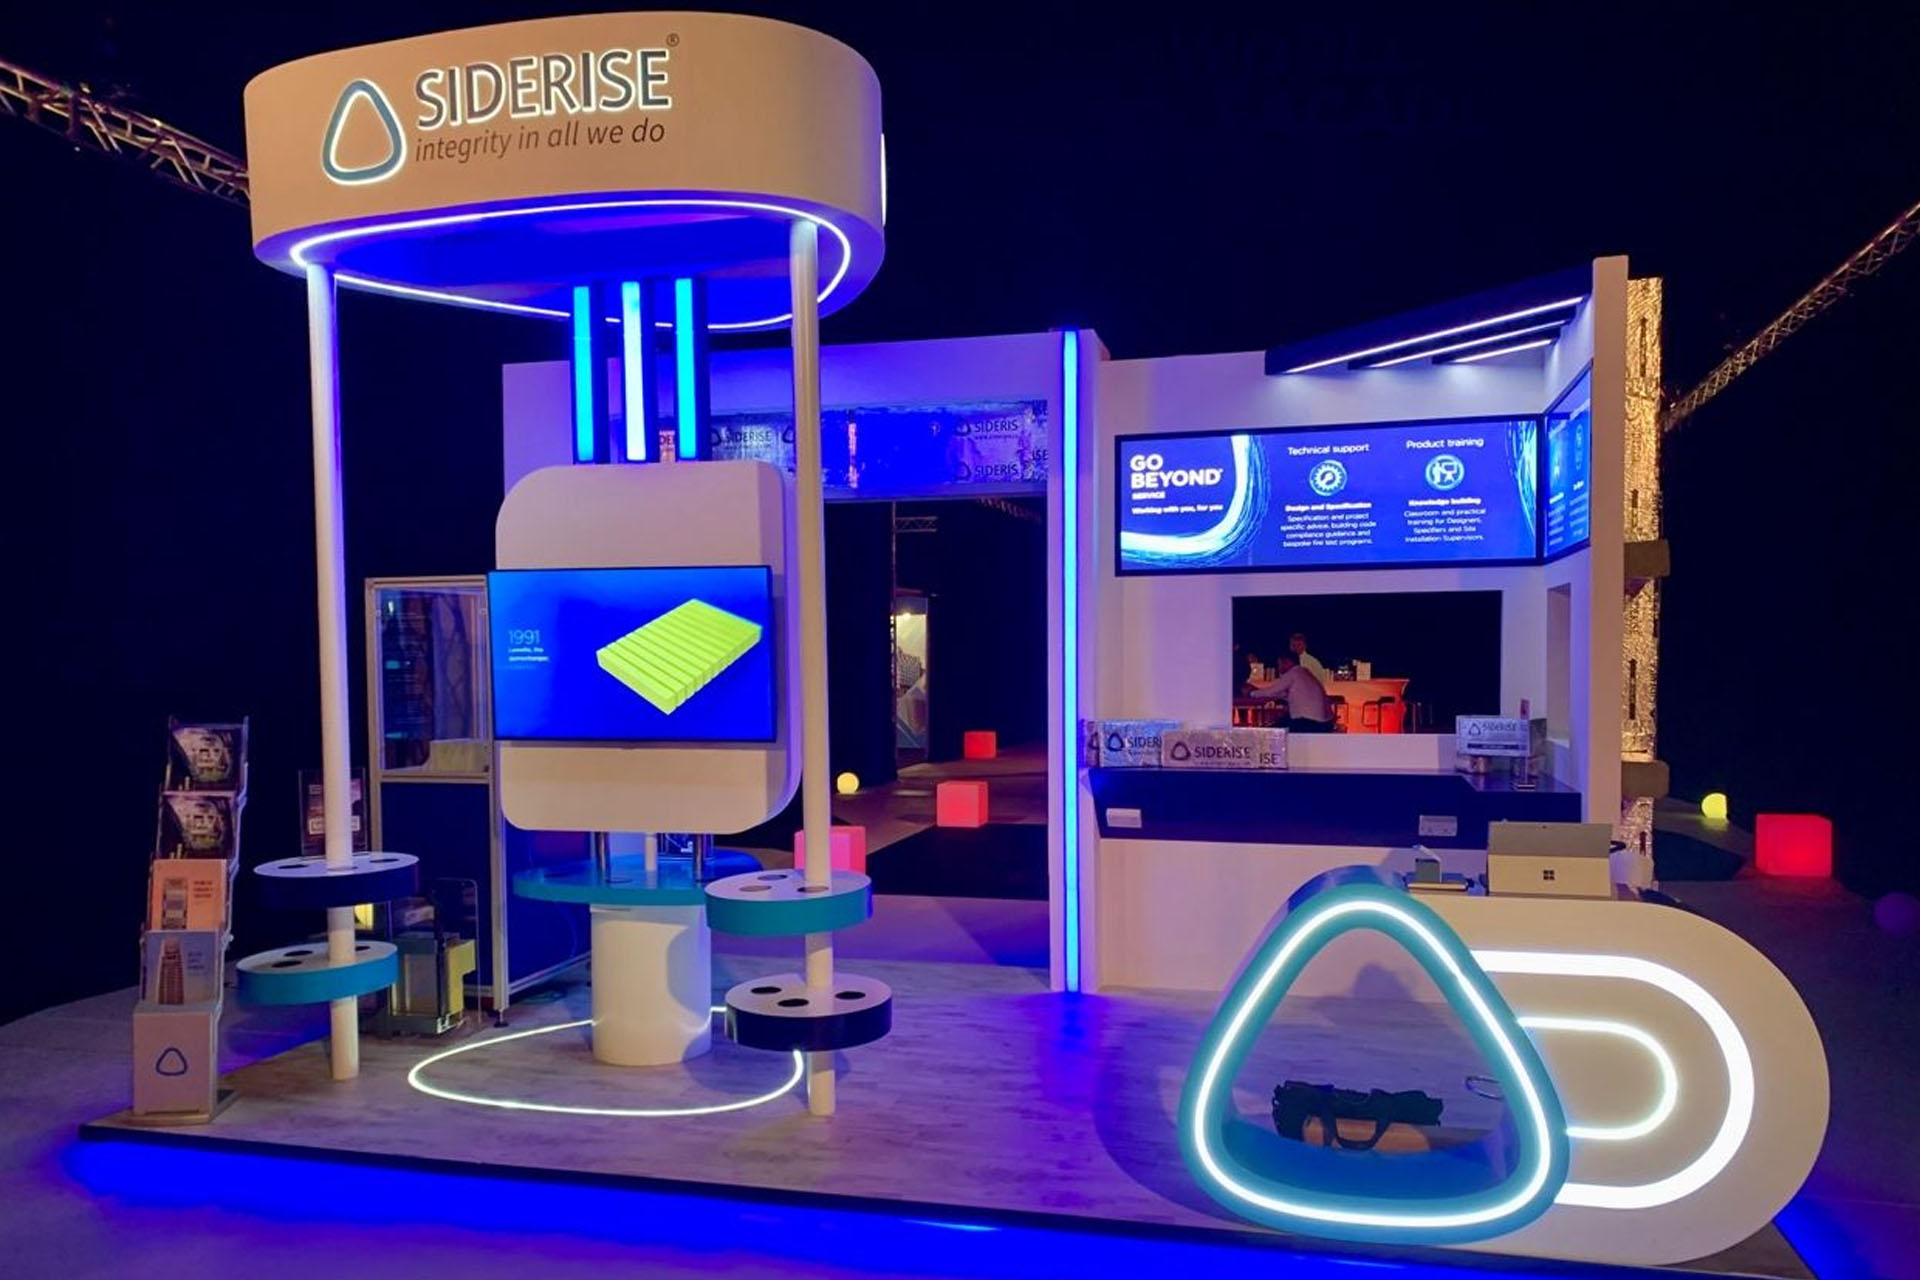 Siderise exhibit at Zak World of Facades Event Dubai